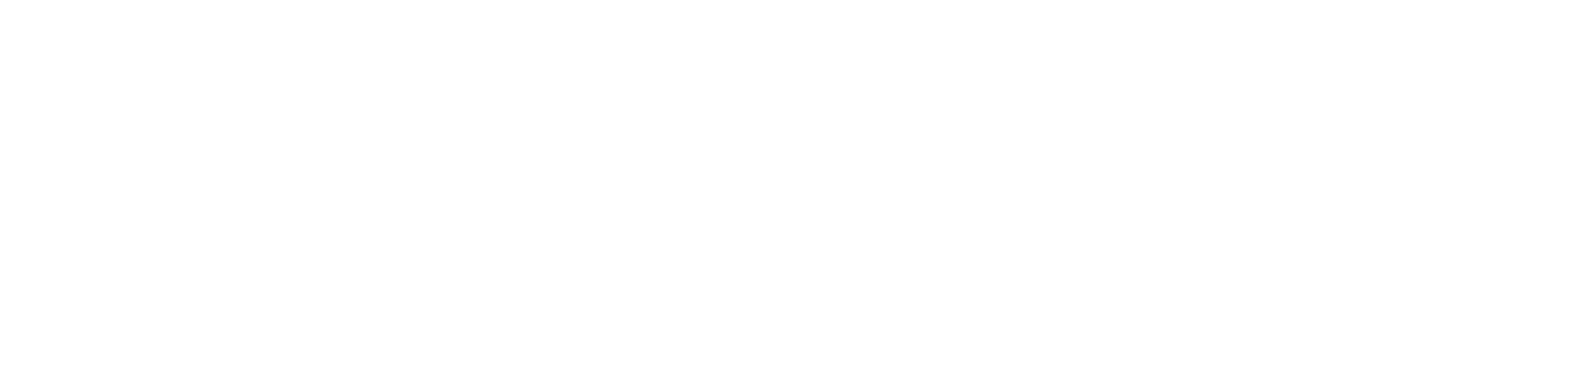 CMS Energy
 logo large for dark backgrounds (transparent PNG)